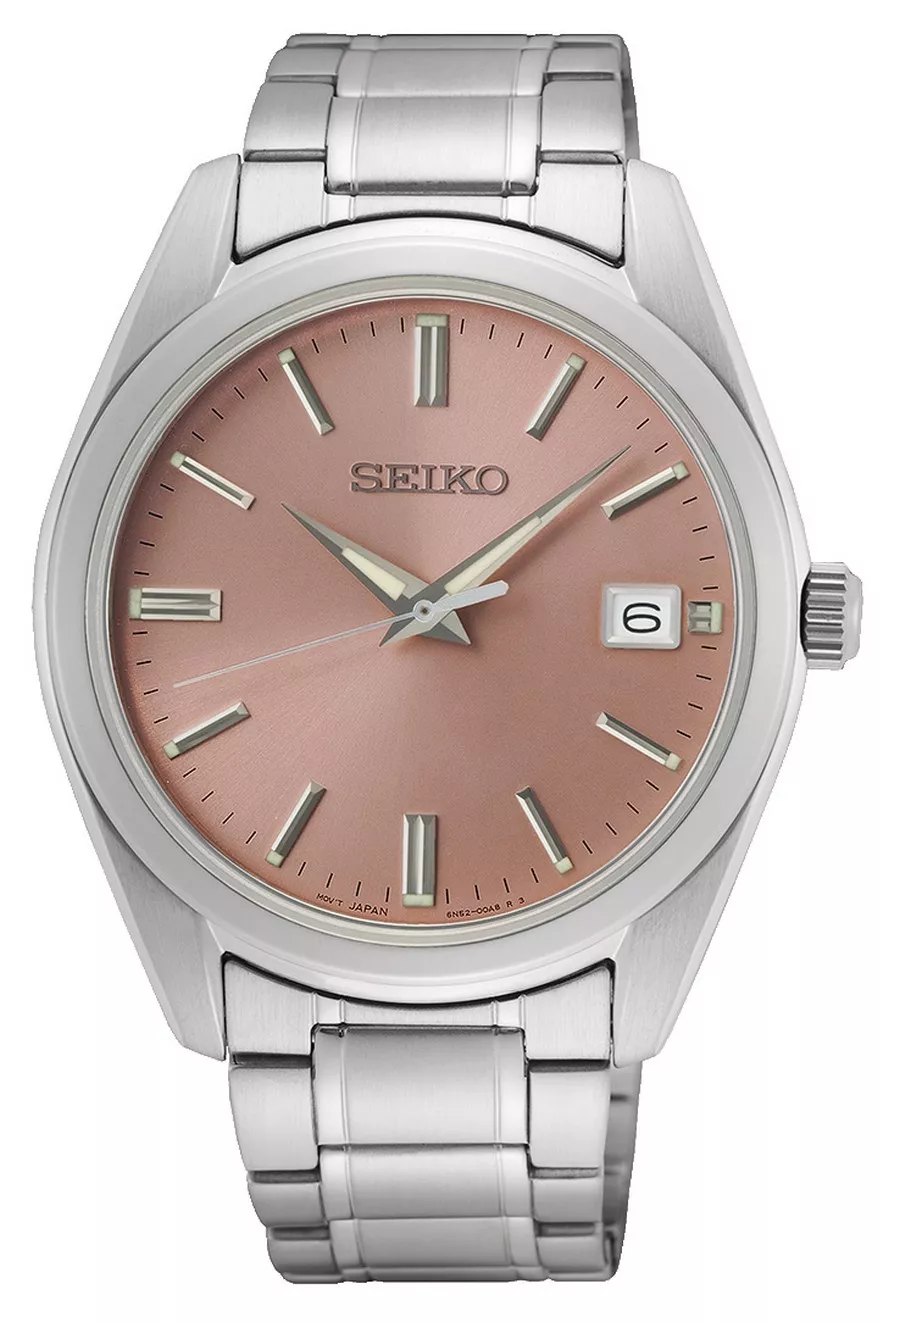 Seiko SUR523P1 horloge zilverkleurig-roze, saffierglas 40,2 mm